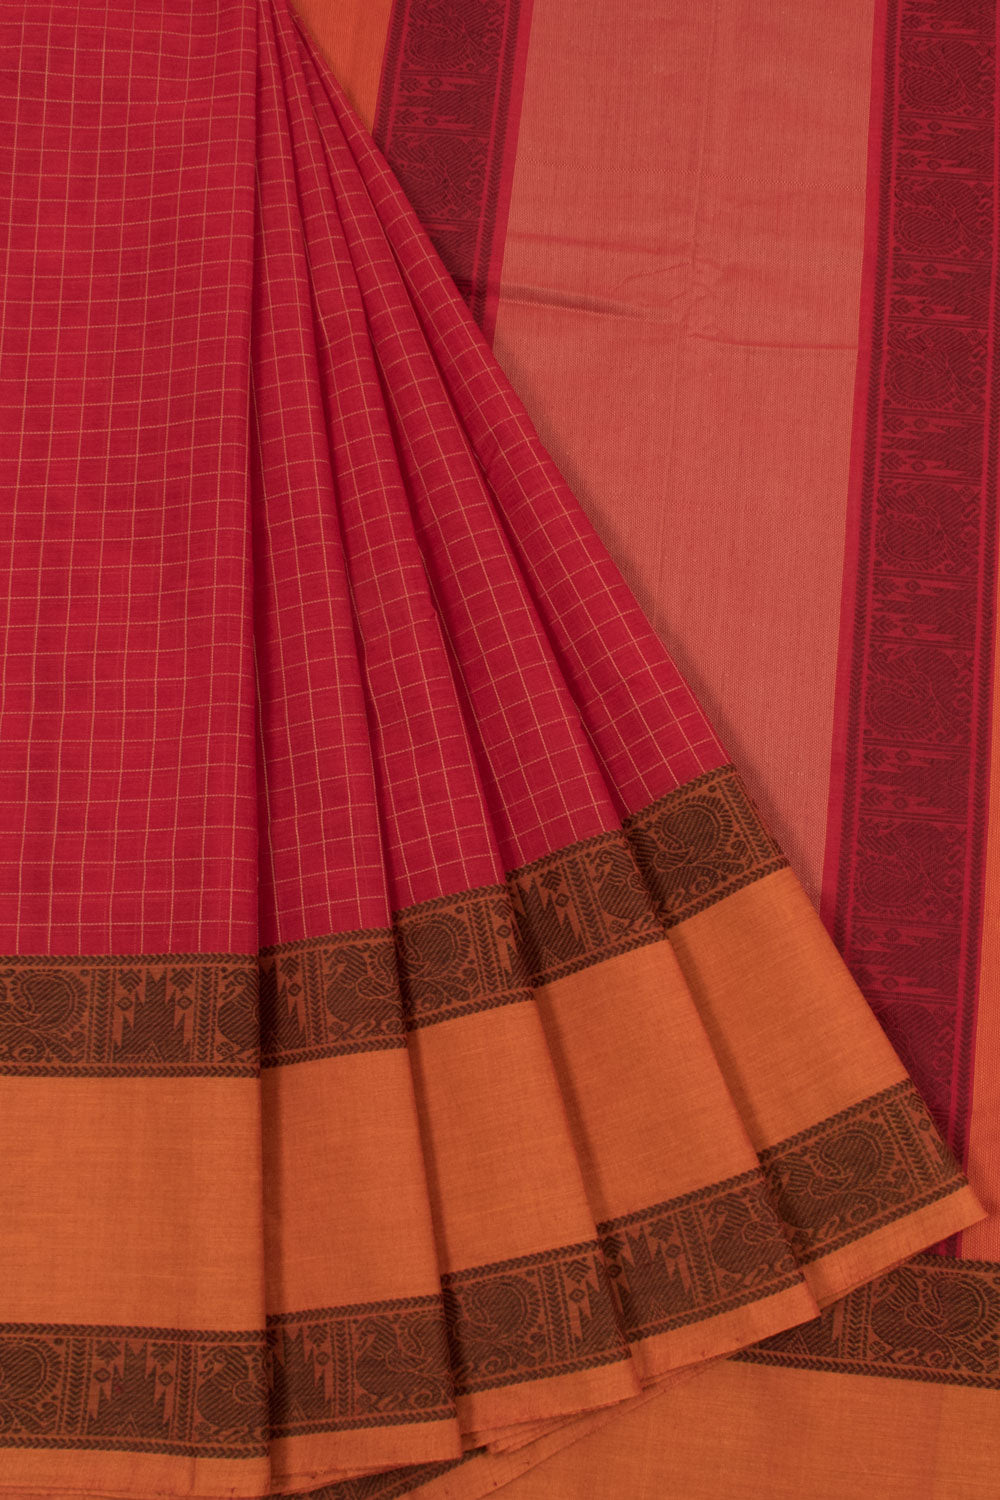 Handloom Kanchi Cotton Saree with Check Design and Peacock Border